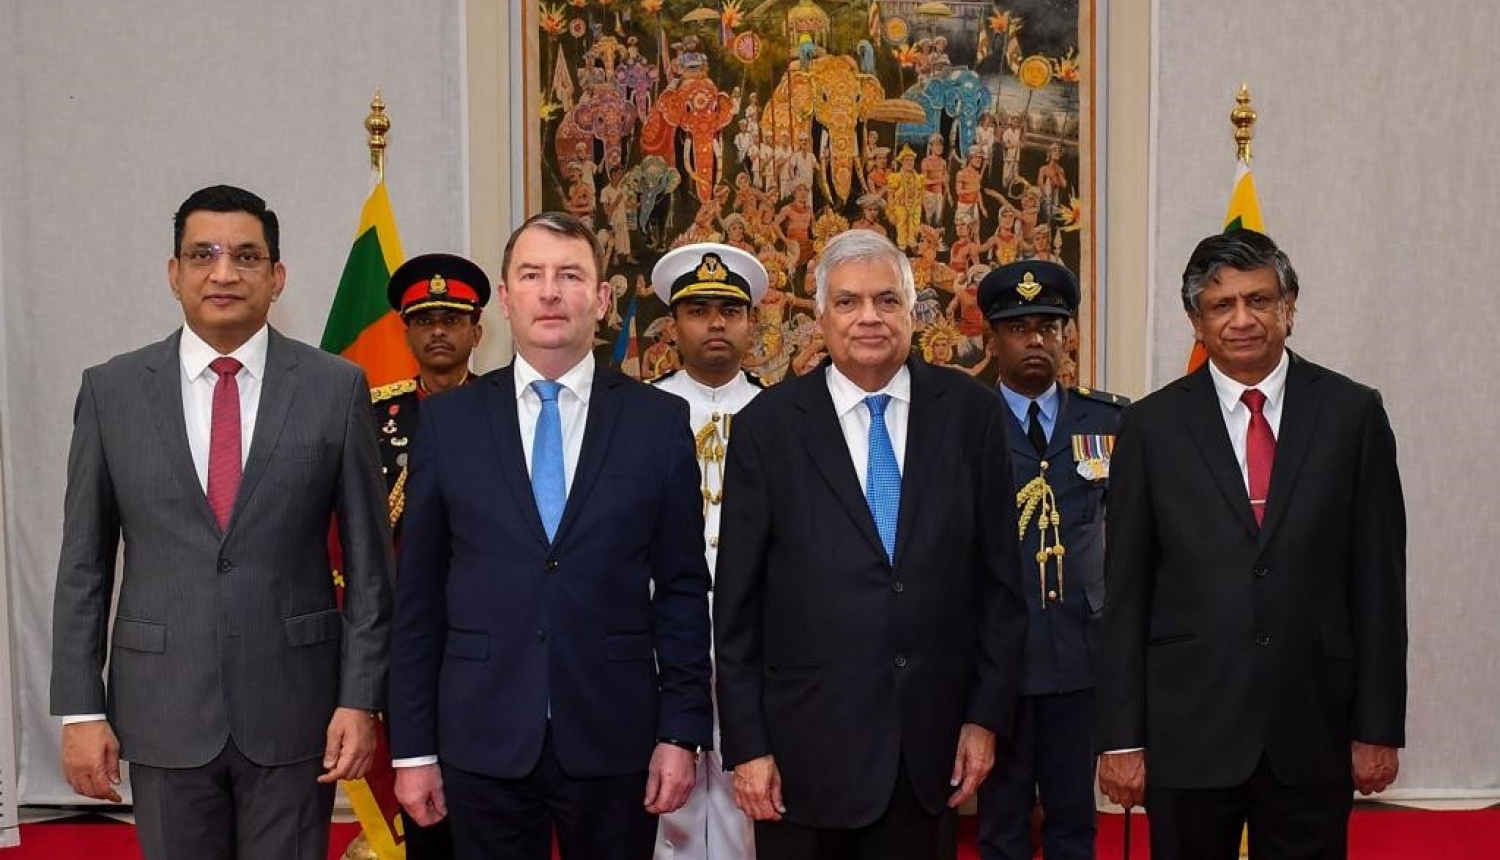 Latvijas vēstnieks Juris Bone iesniedza akreditācijas vēstuli Šrilankas prezidentam Ranilam Vikremesingem (Ranil Wickremesinghe)